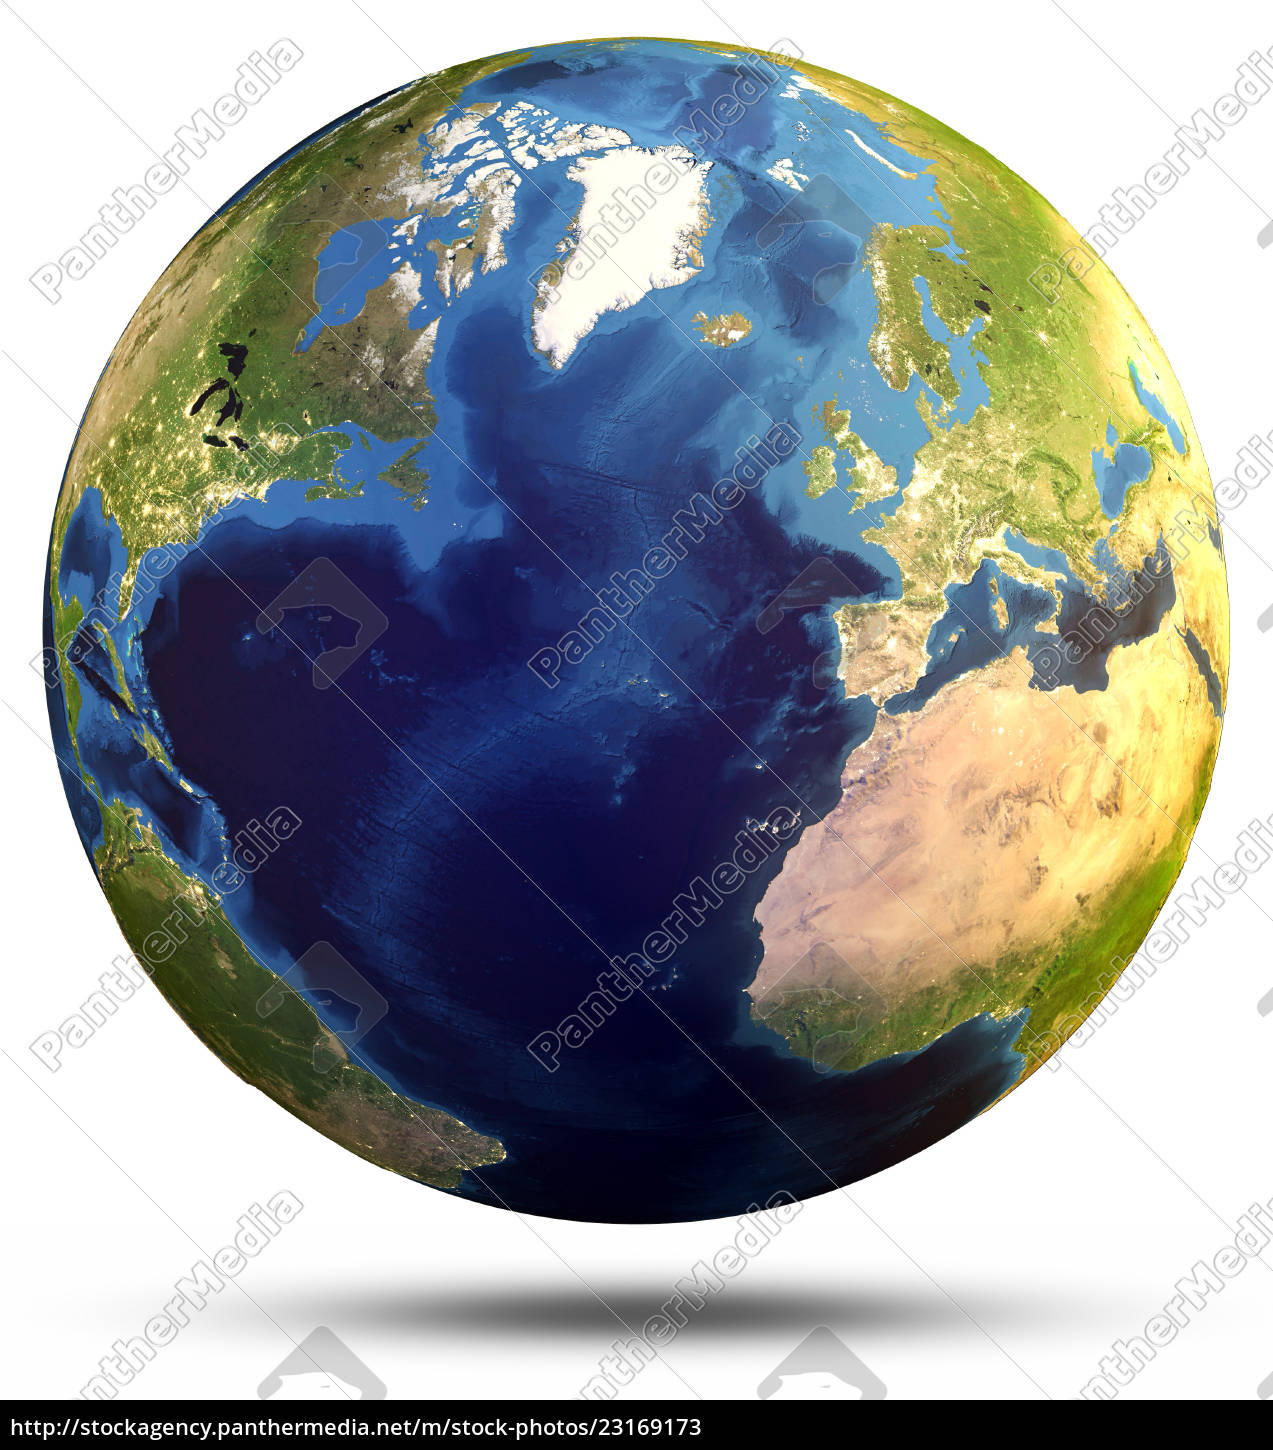 smække Symptomer forståelse planet globus karte 3d rendering - Lizenzfreies Bild #23169173 |  Bildagentur PantherMedia